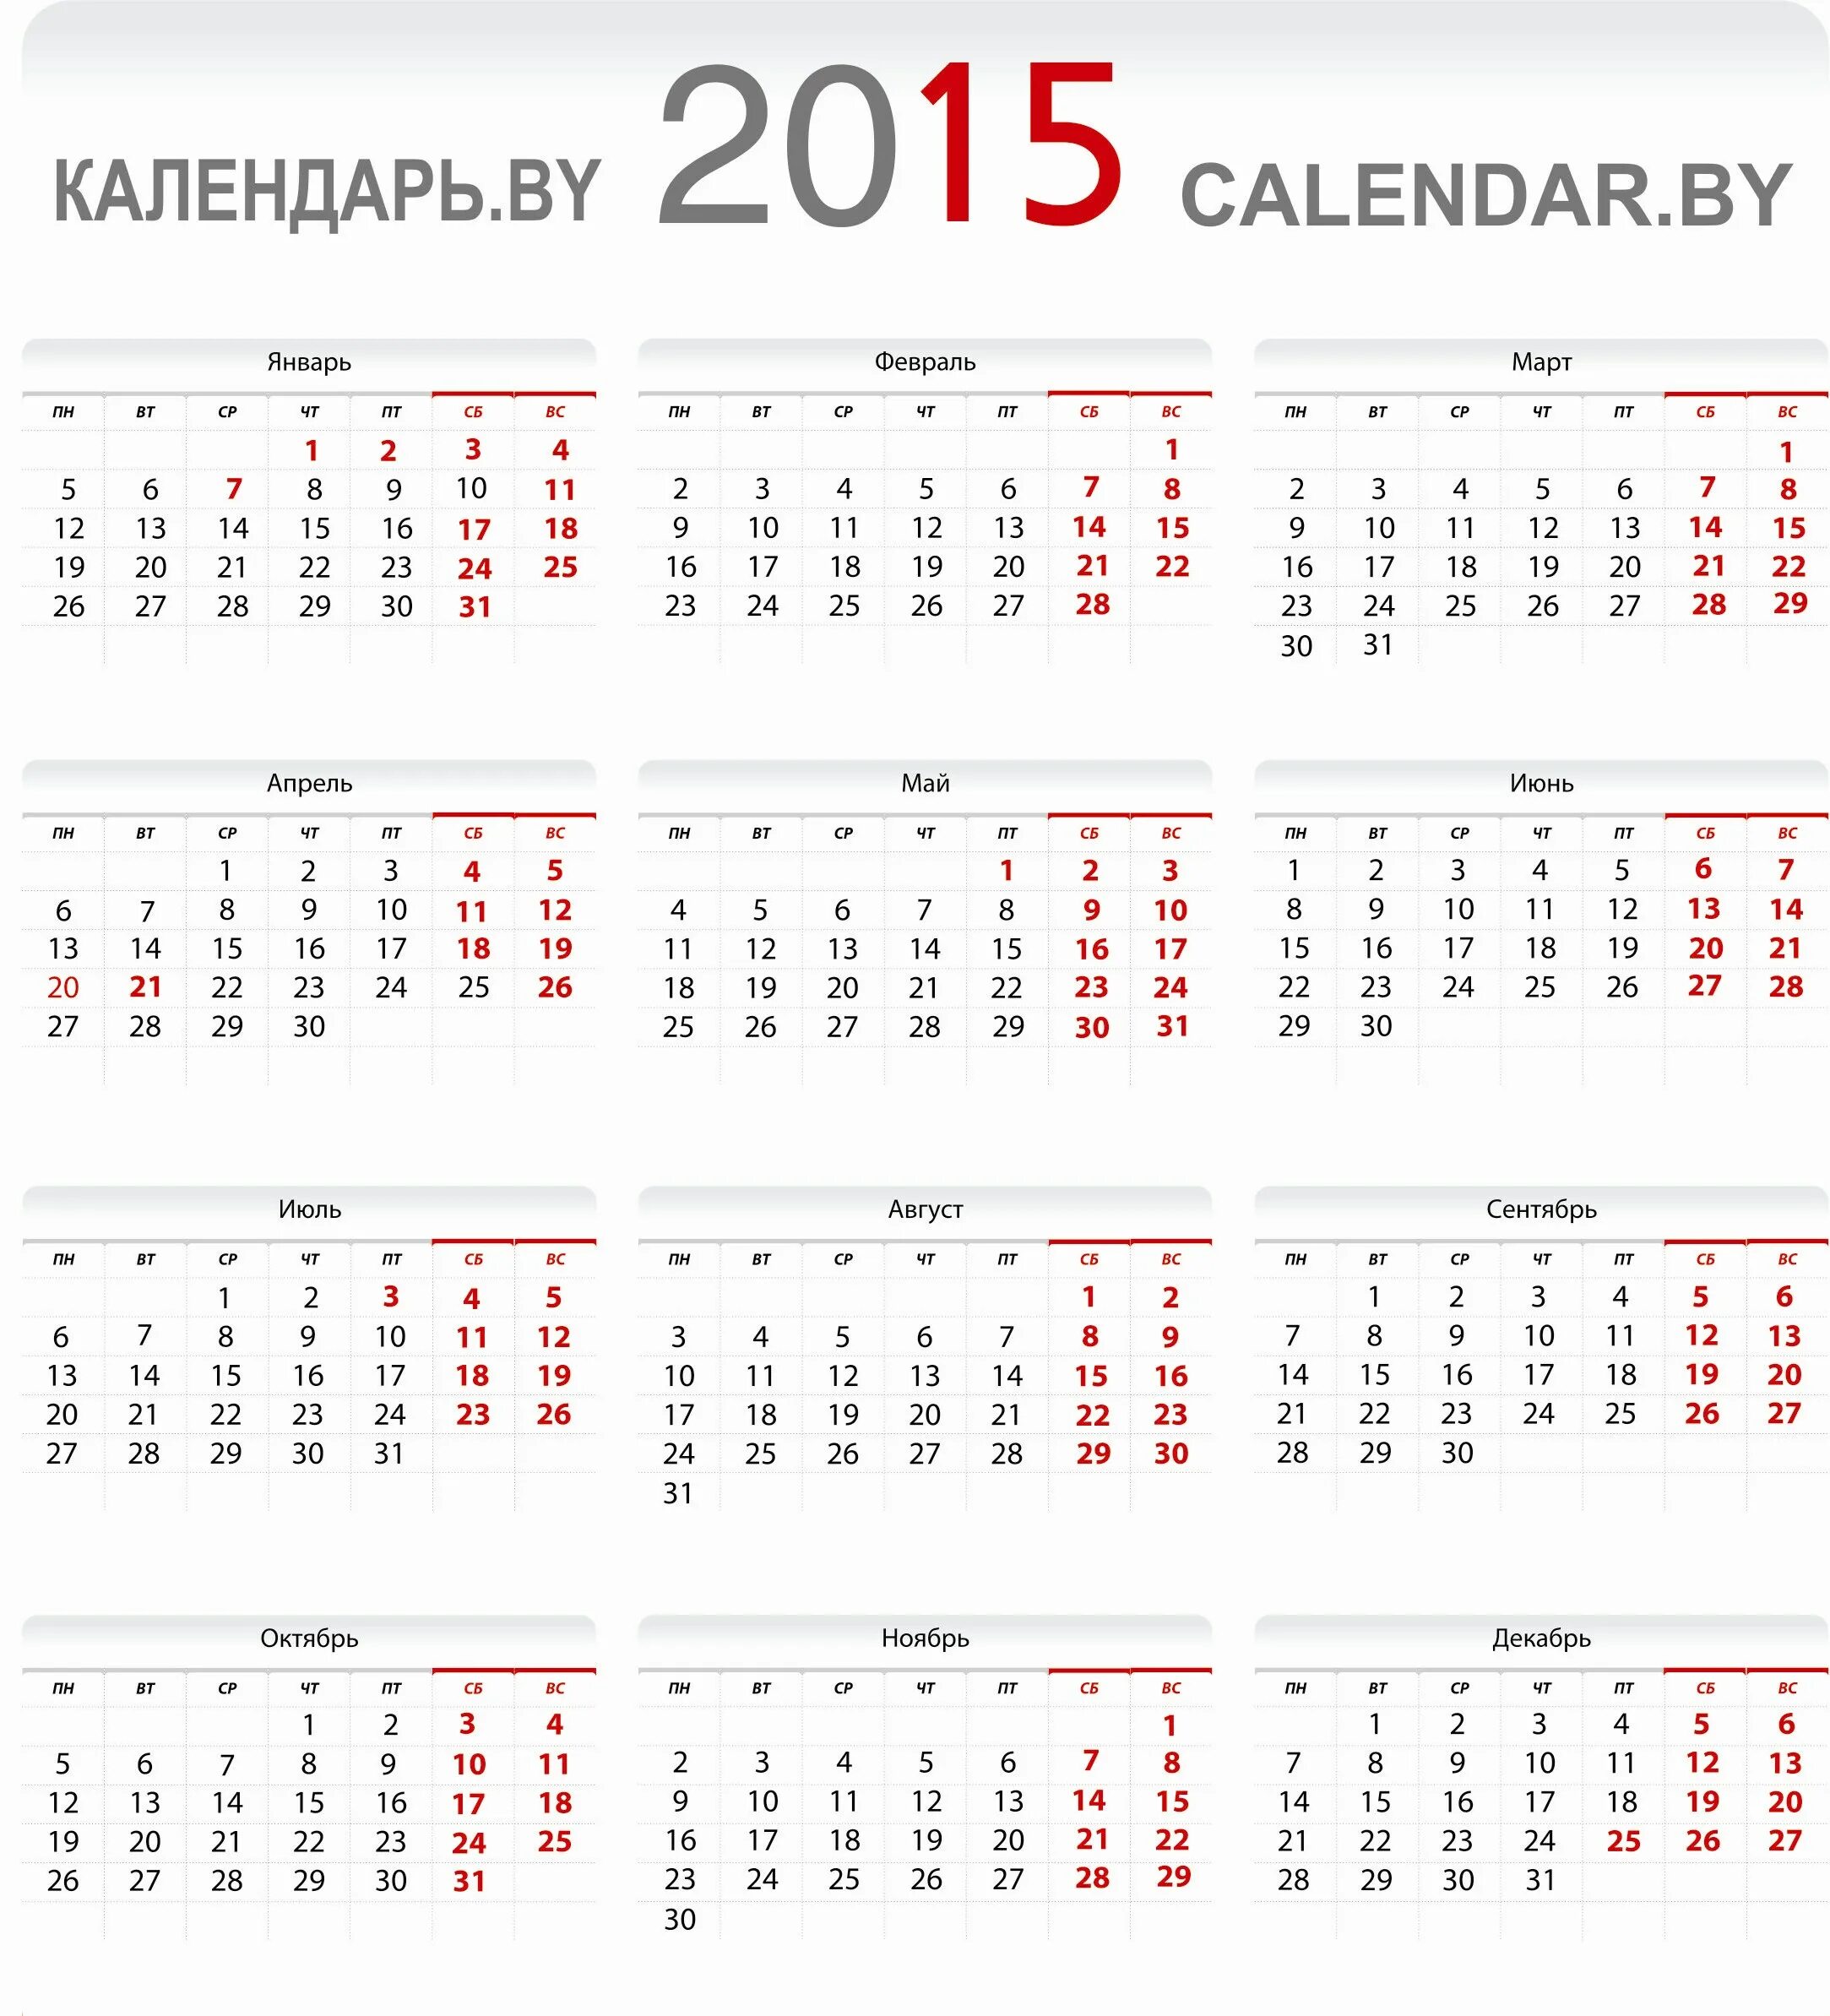 Календарь 2015. Календарь на 2015 год. Календарь 2015г. Календарь 2015 года по месяцам.